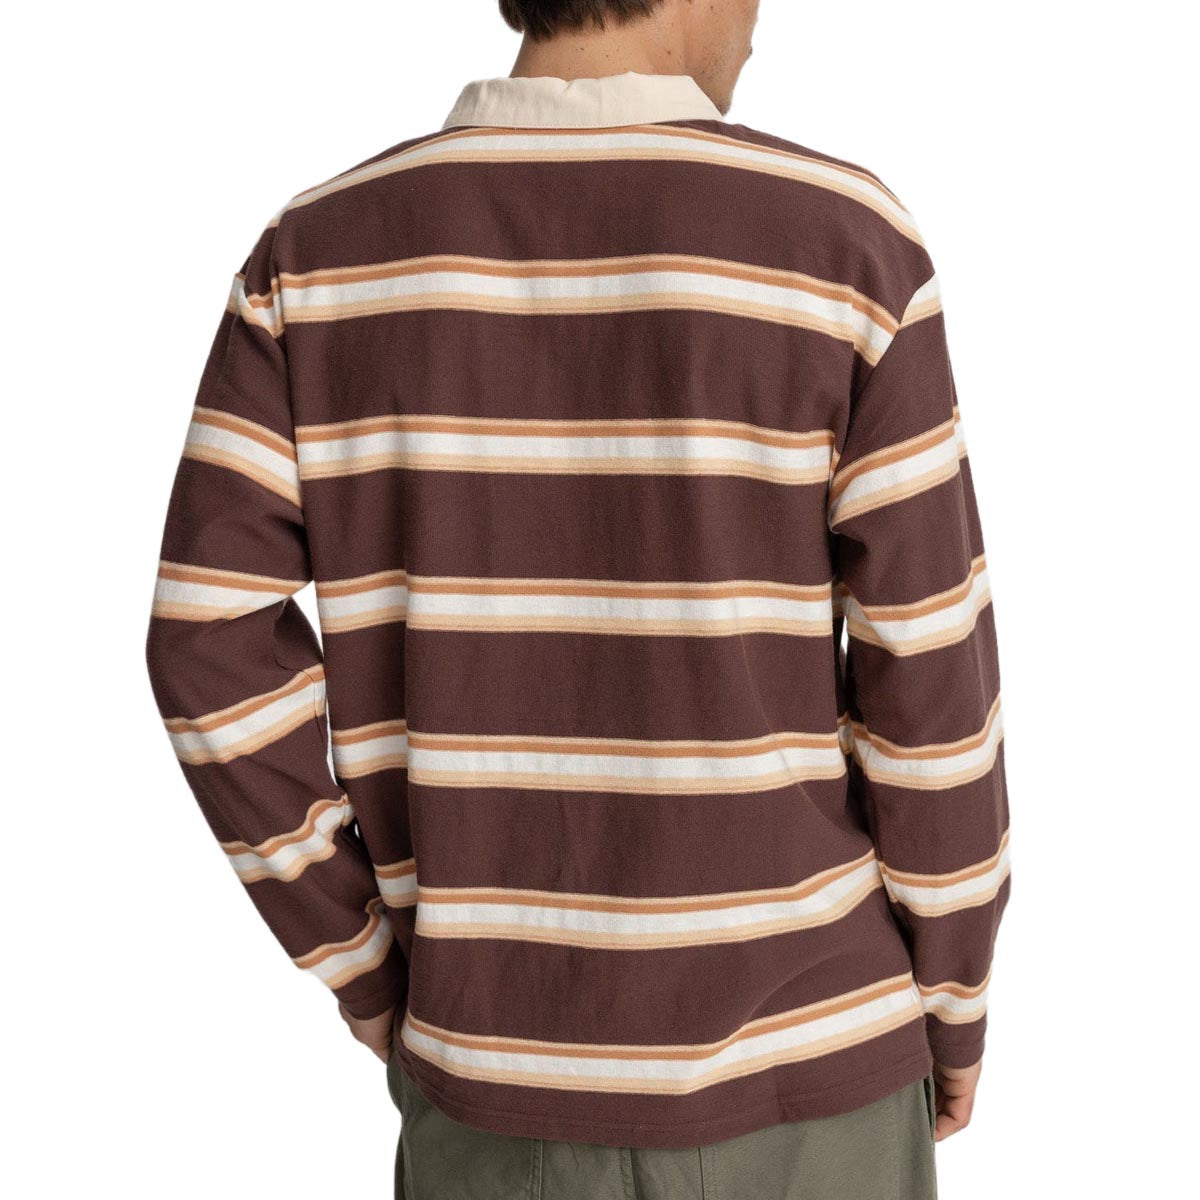 Rhythm Vintage Stripe Polo Long Sleeve Shirt - Chocolate image 2